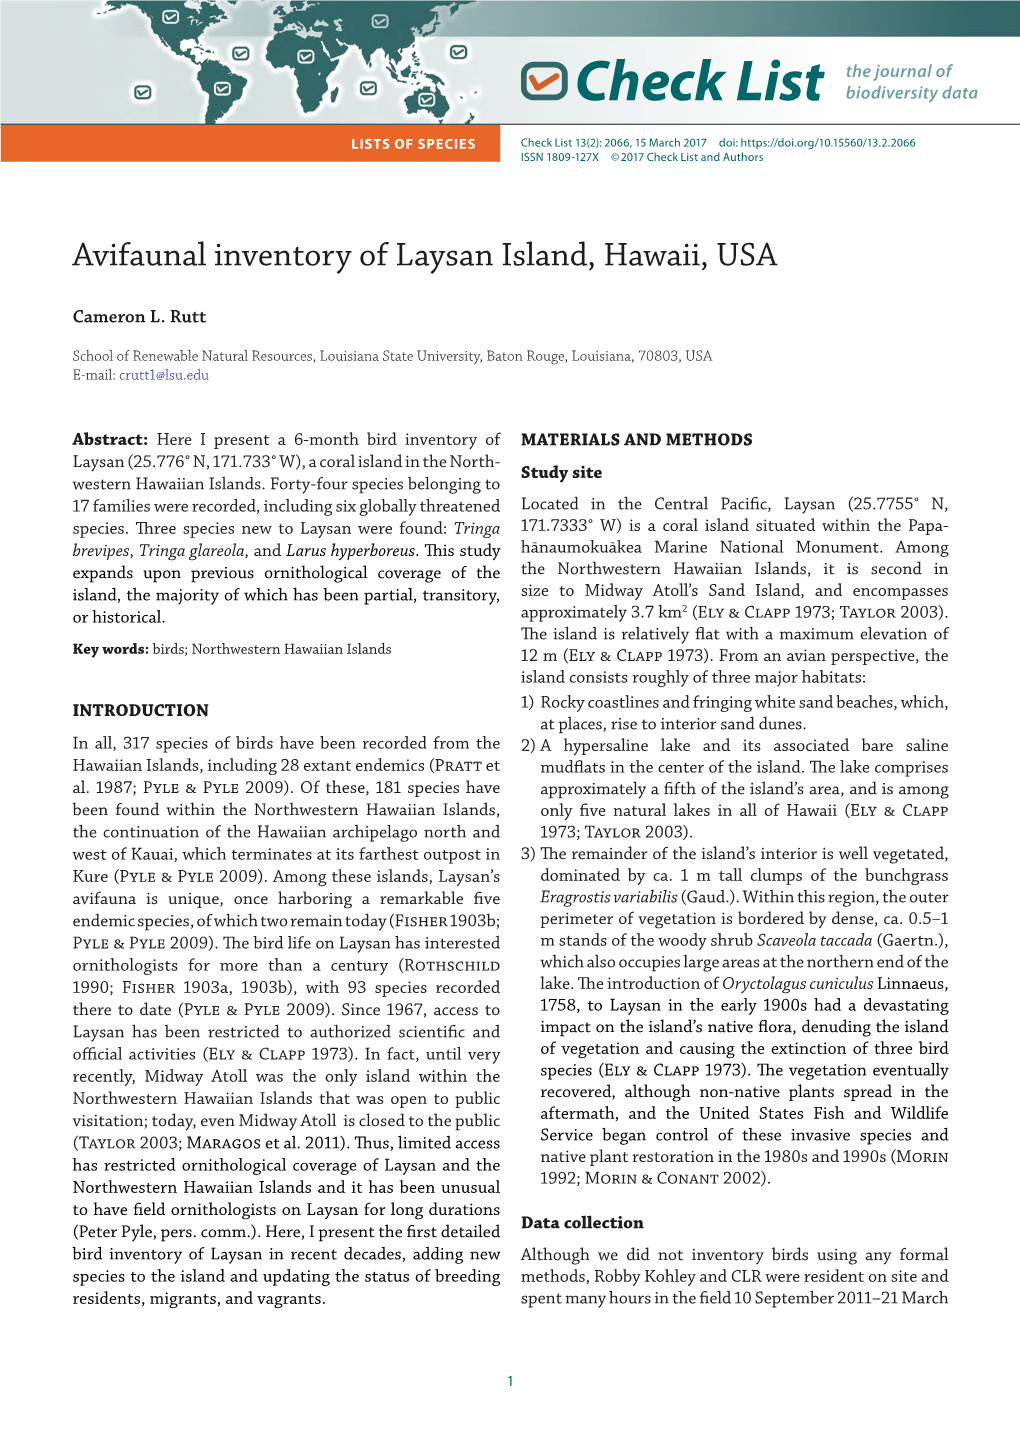 Avifaunal Inventory of Laysan Island, Hawaii, USA